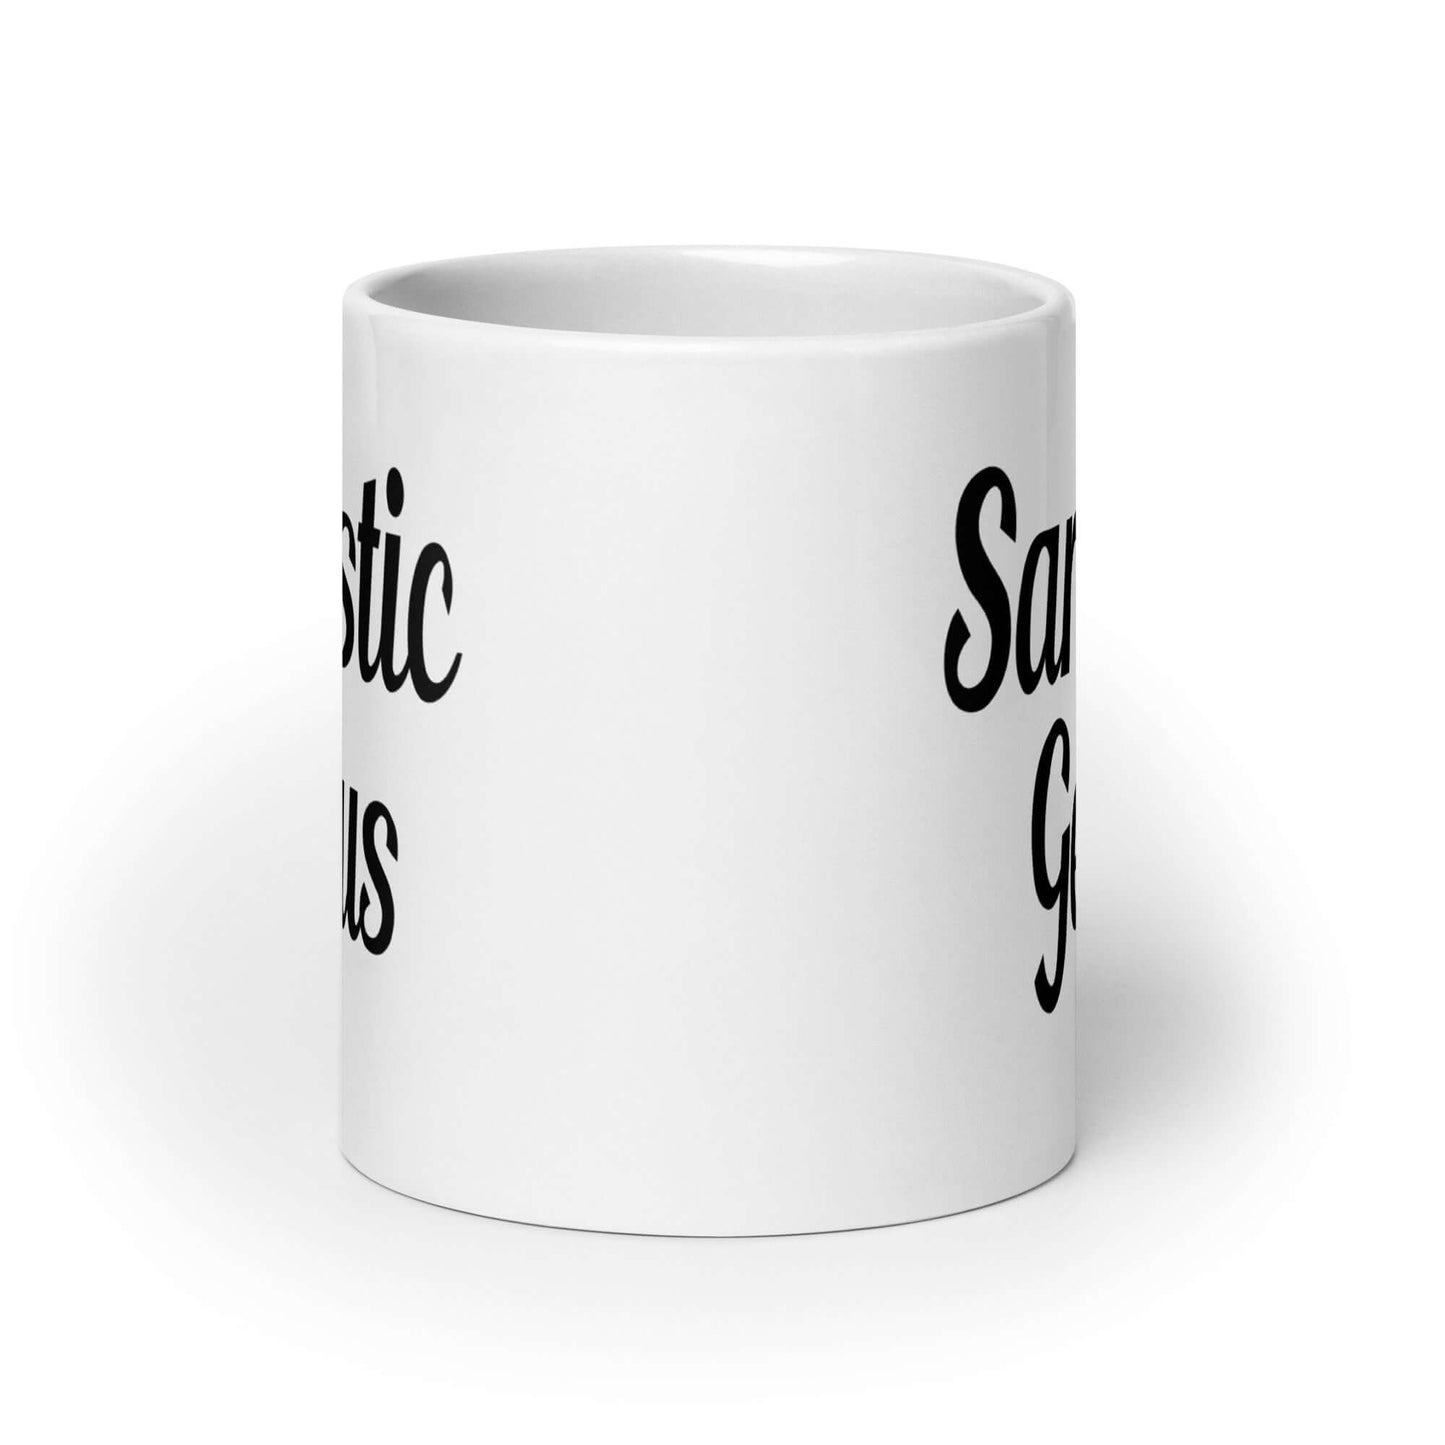 White ceramic coffee mug with the words Sarcastic Genius printed on both sides of the mug.